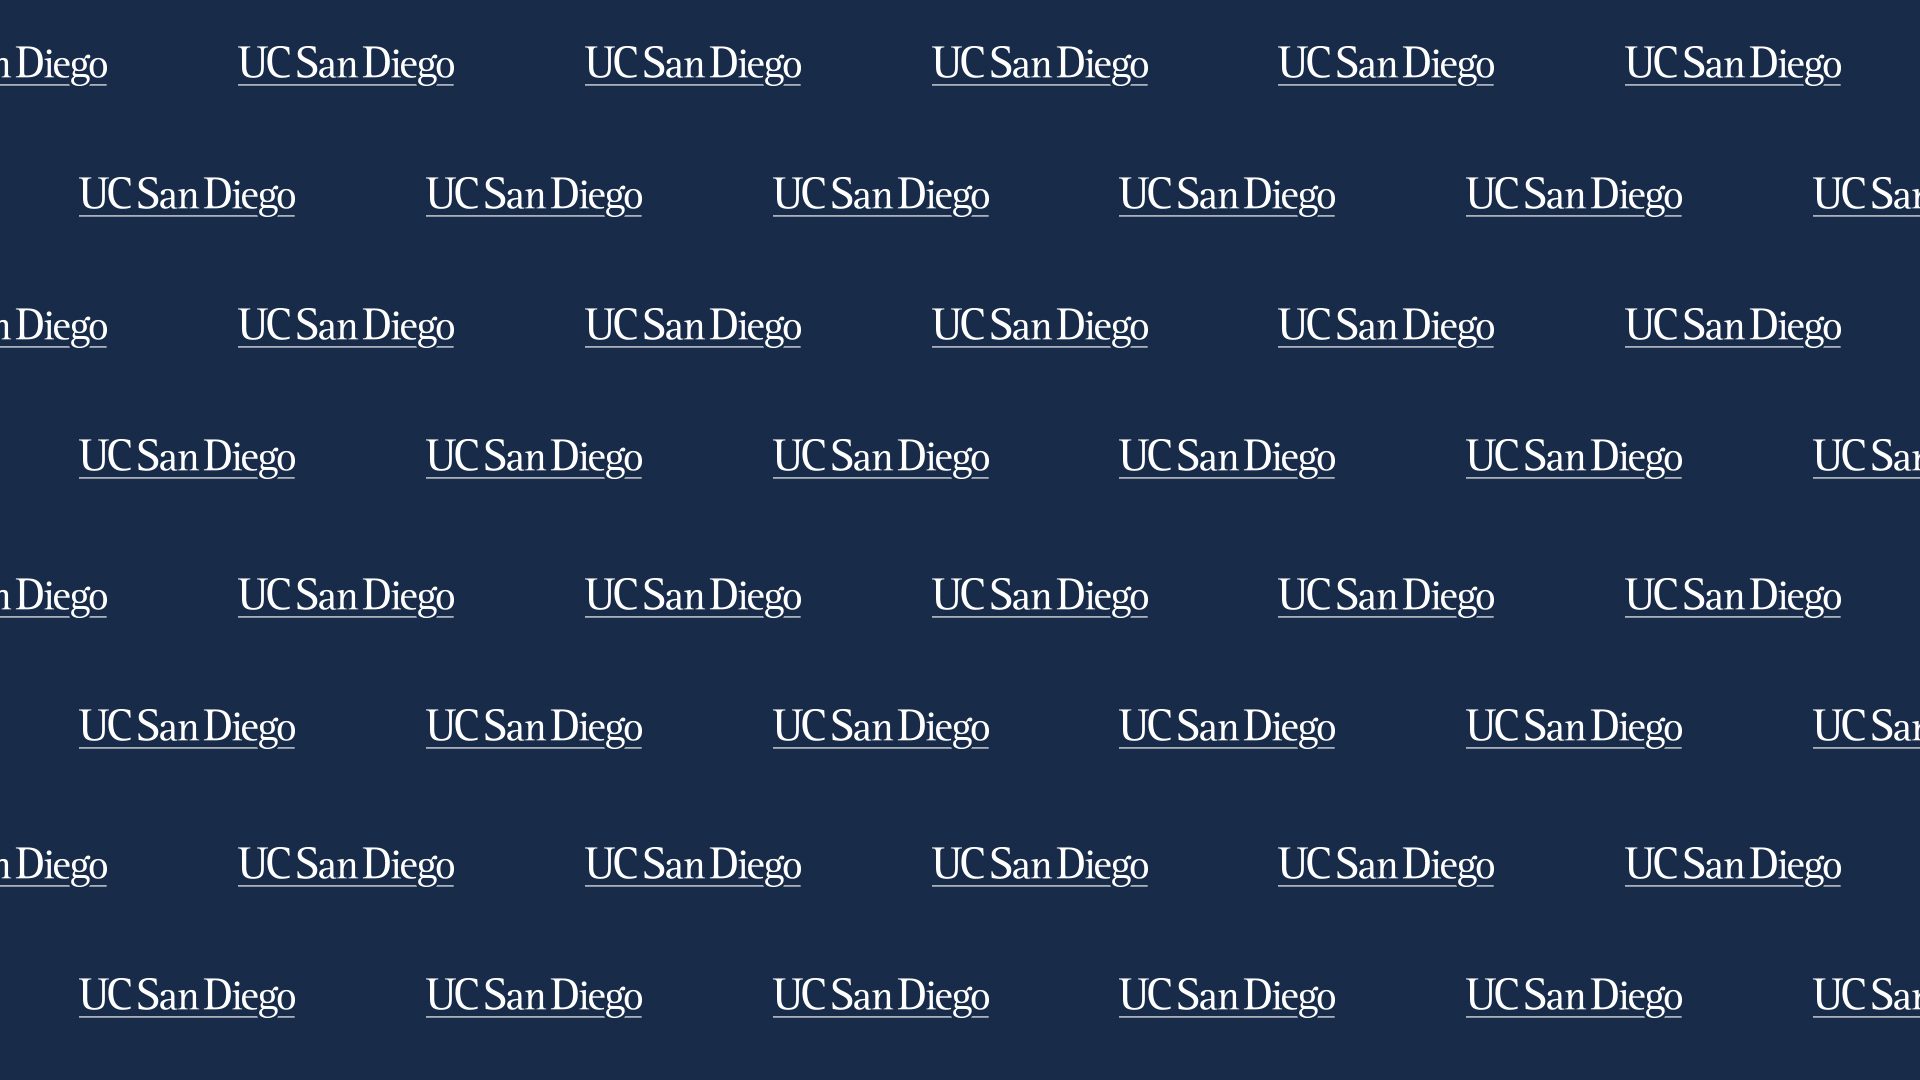 Federal Spend on Universities – #8 (tied) University of California, San Diego